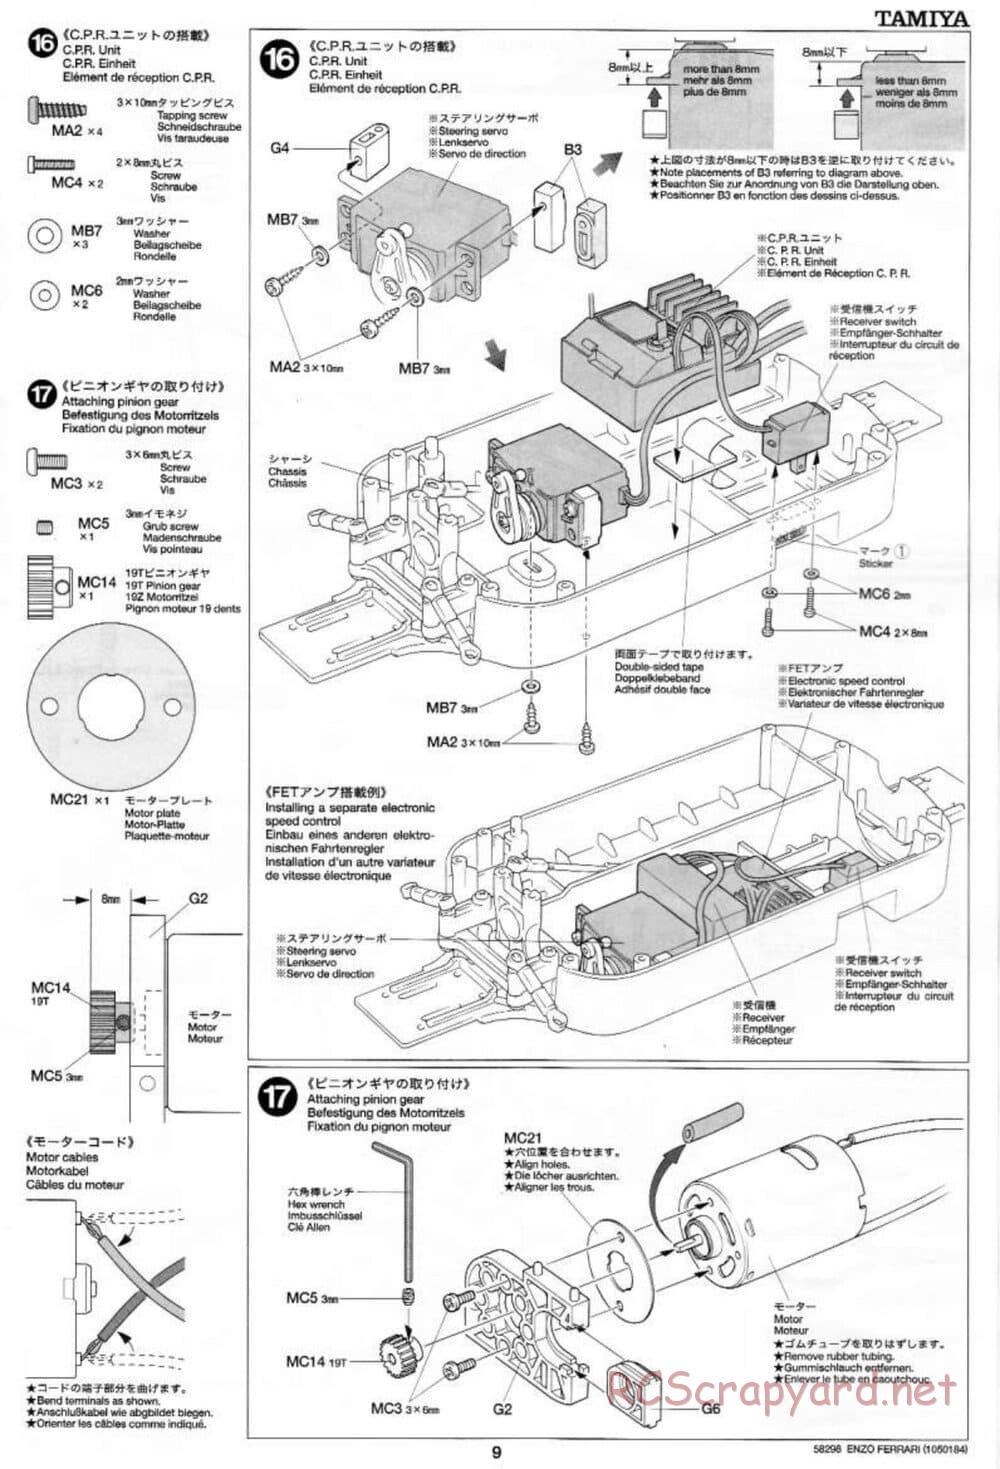 Tamiya - Enzo Ferrari - TB-01 Chassis - Manual - Page 9